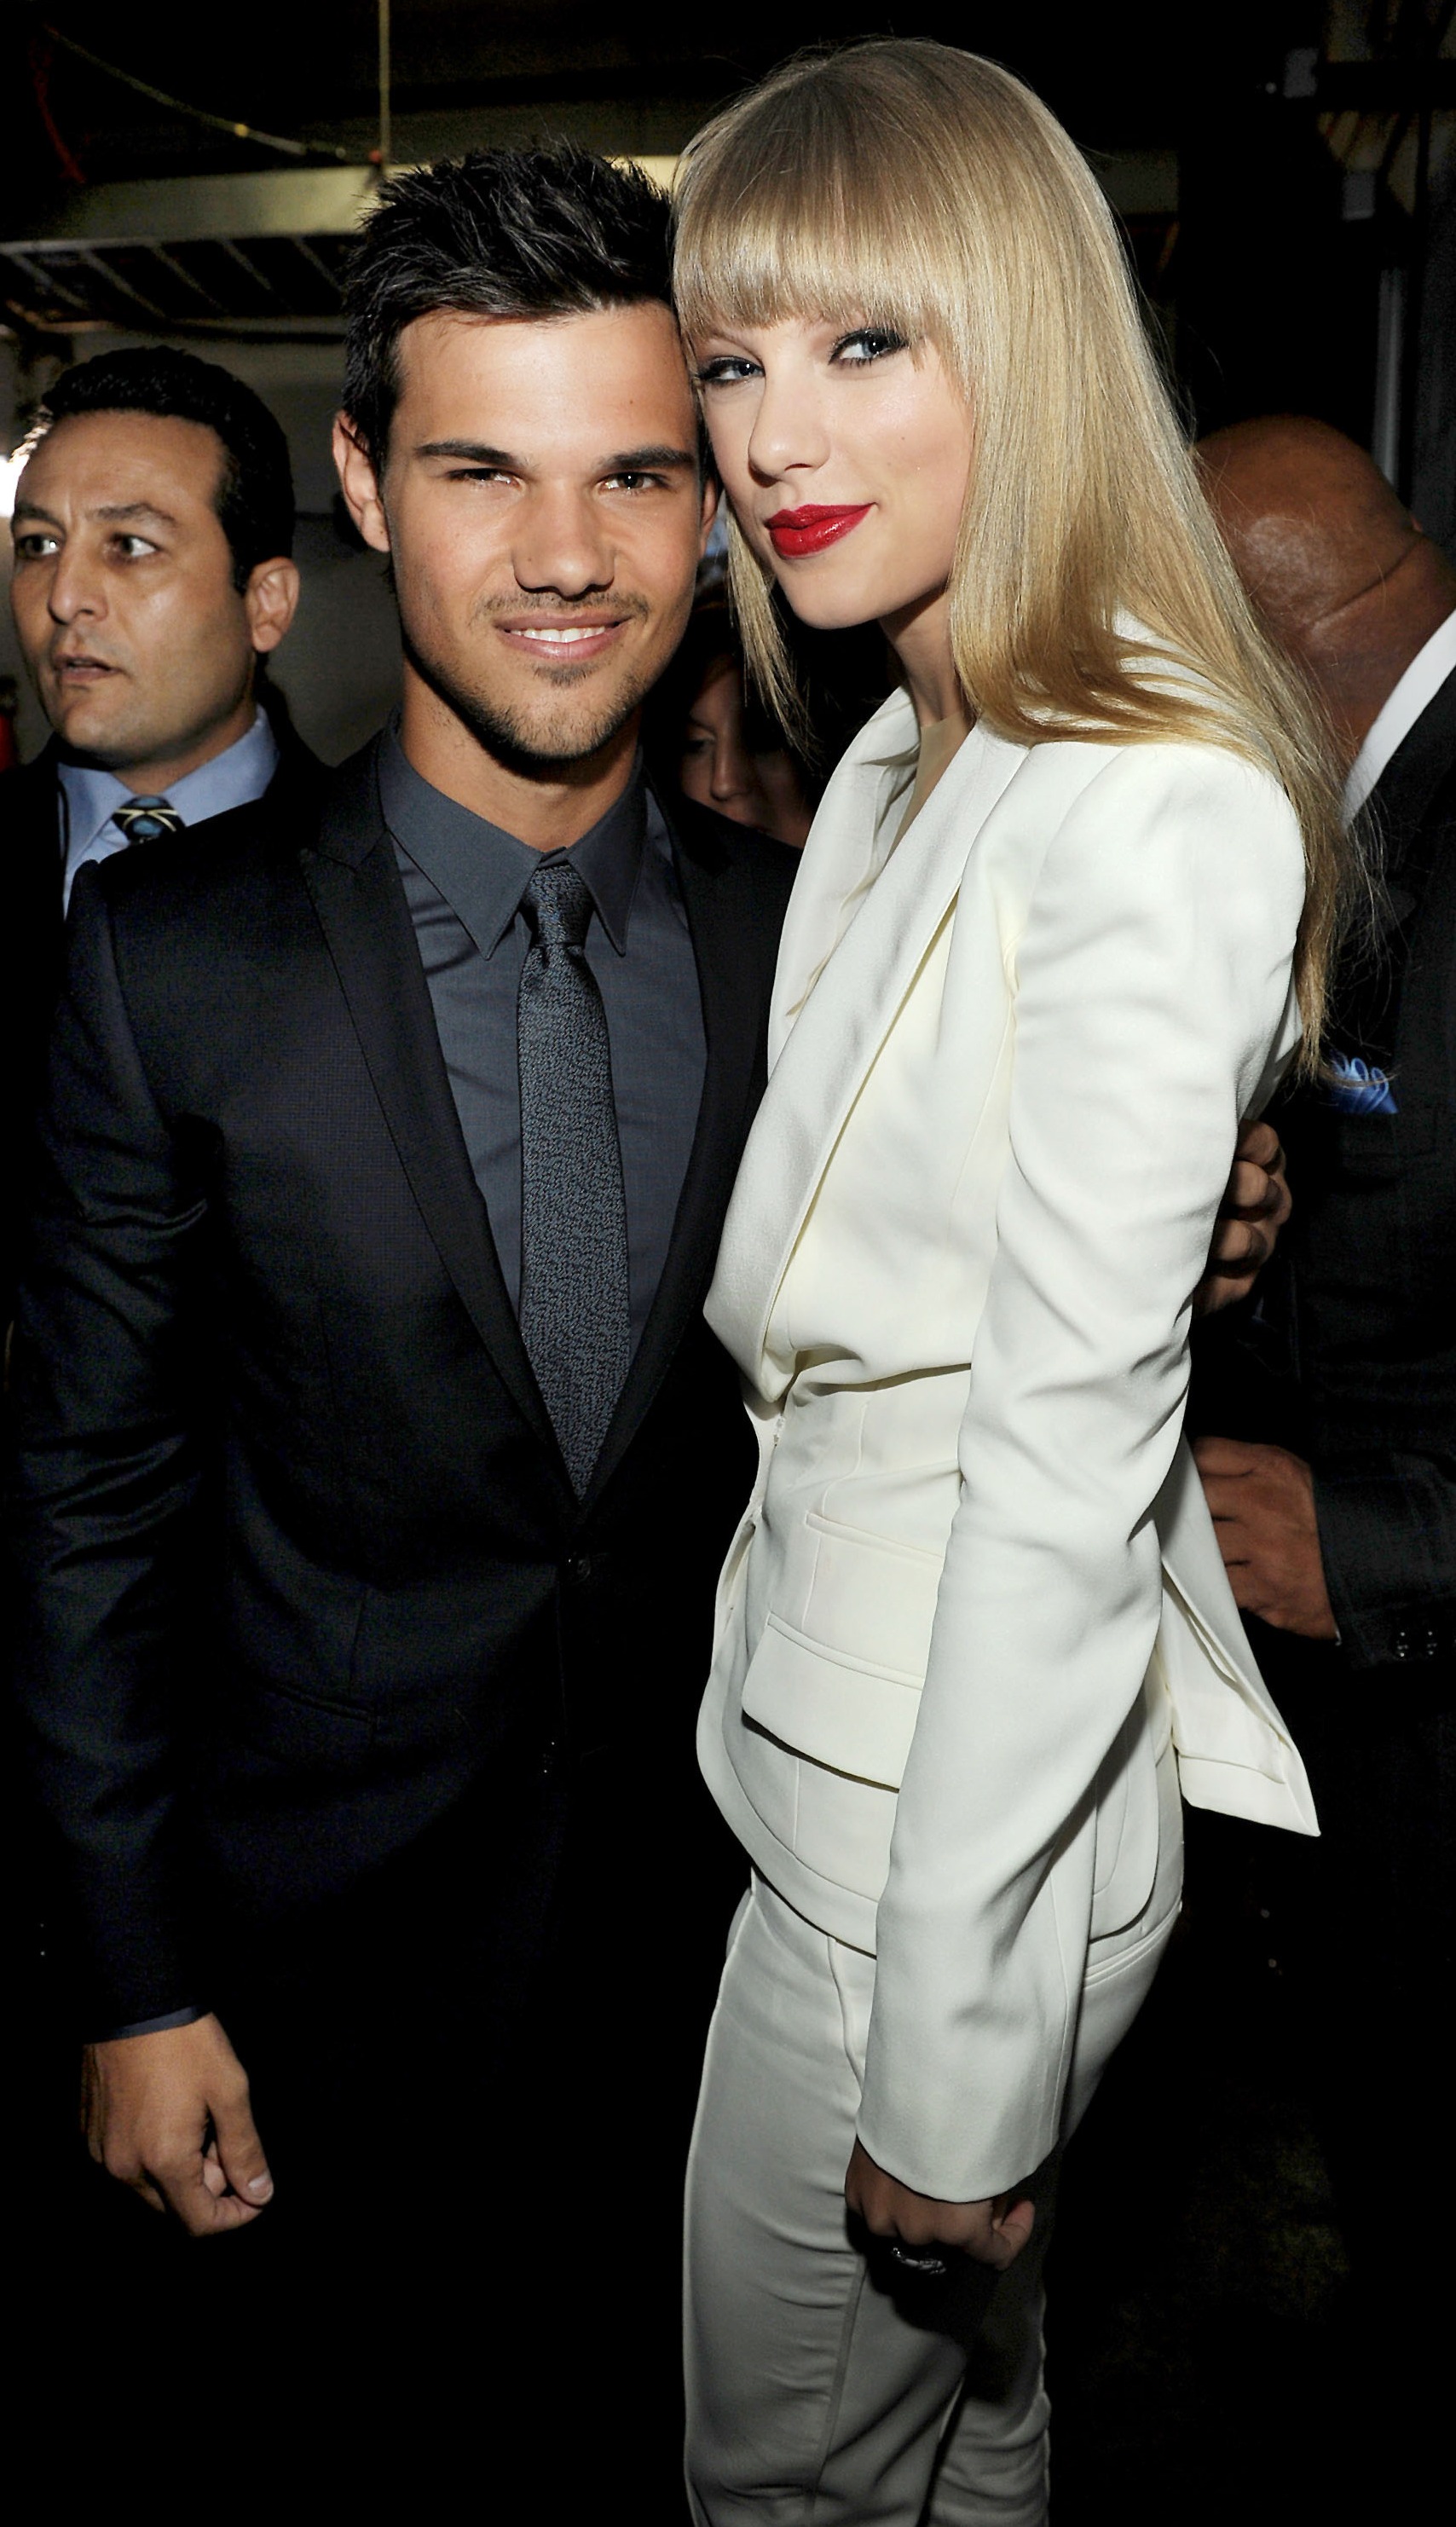 Taylor had fond memories with namesake Taylor Lautner